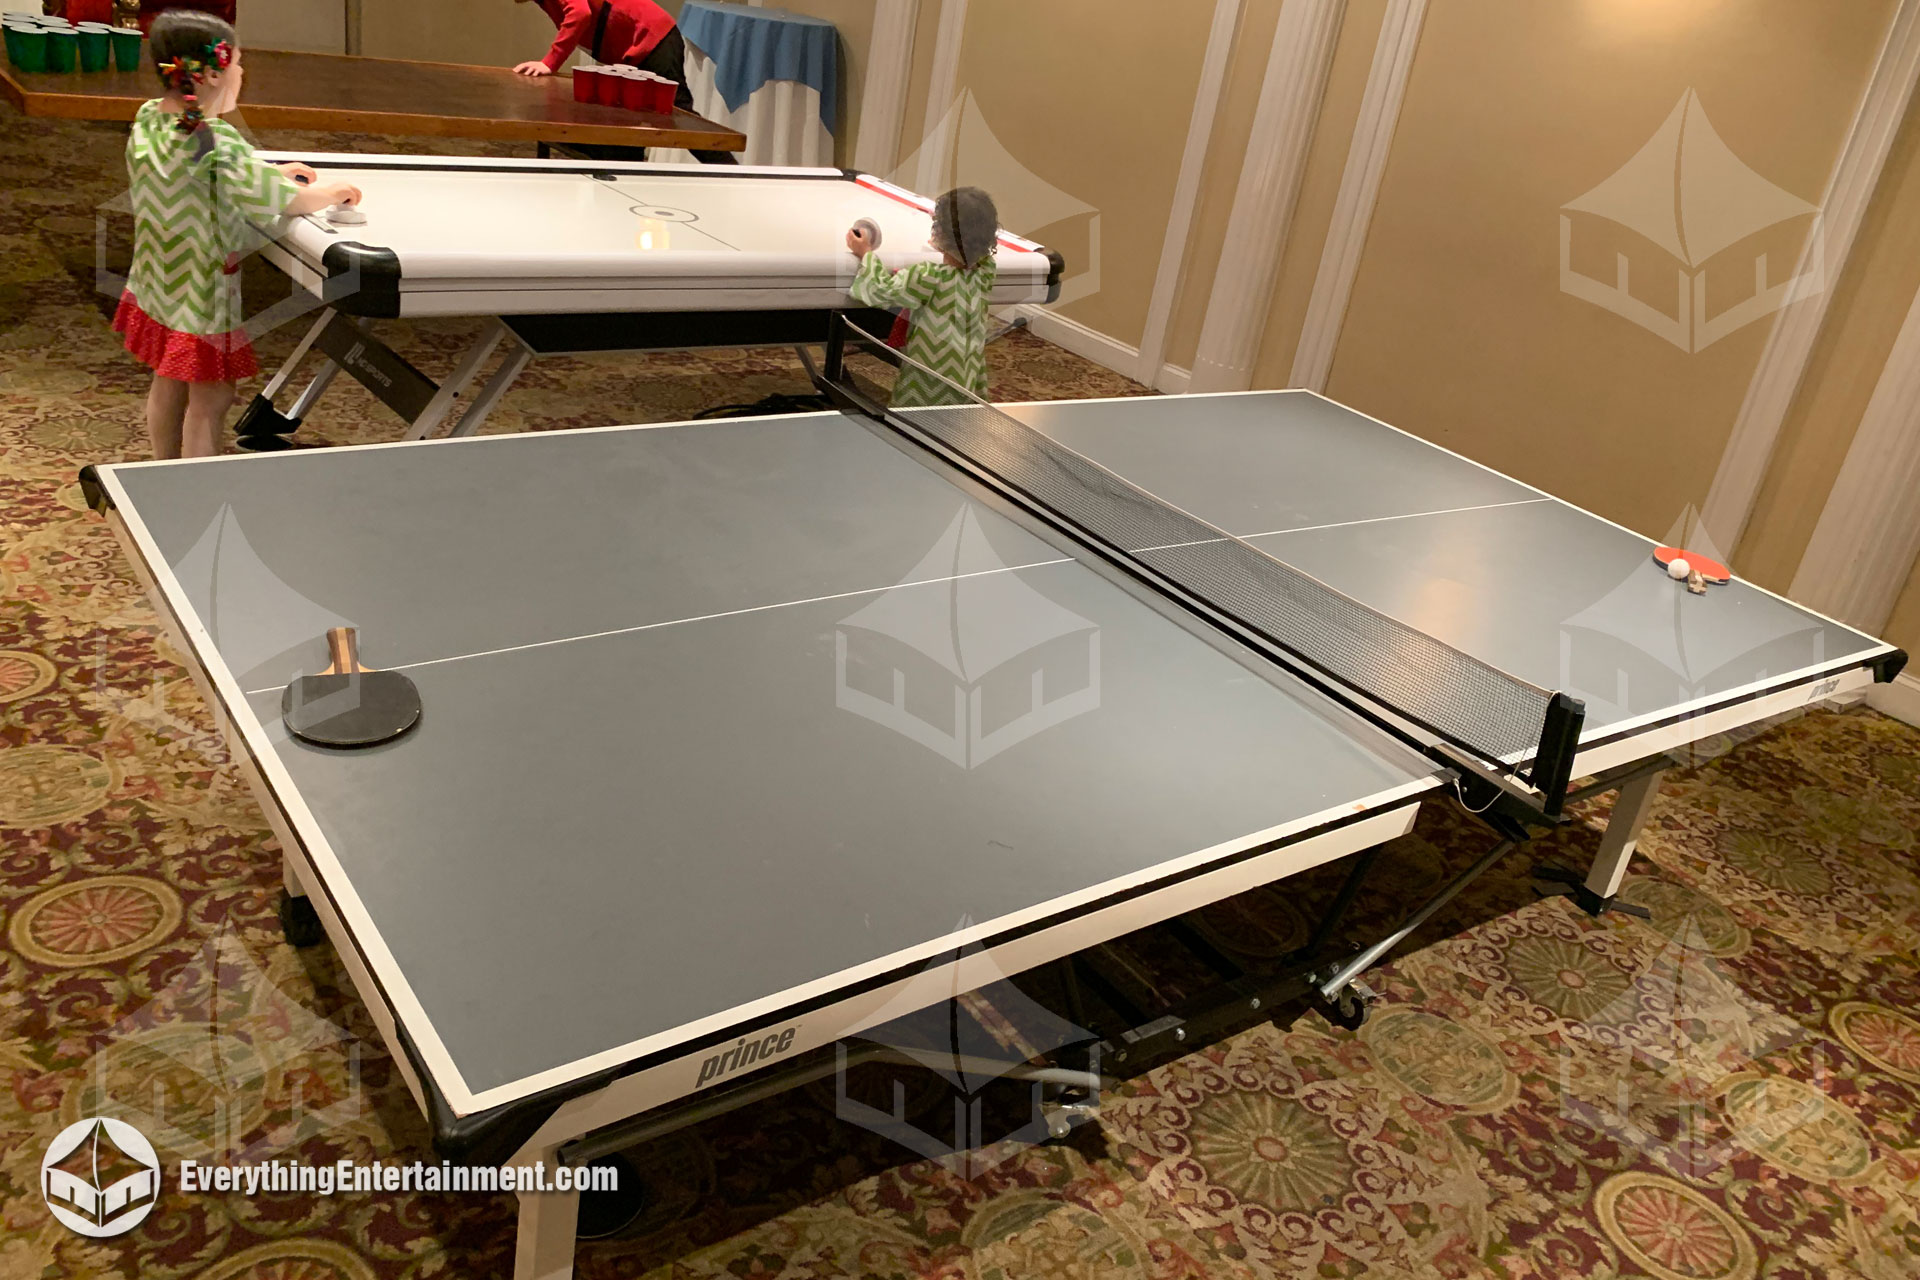  Ping Pong – a fun Racquet!